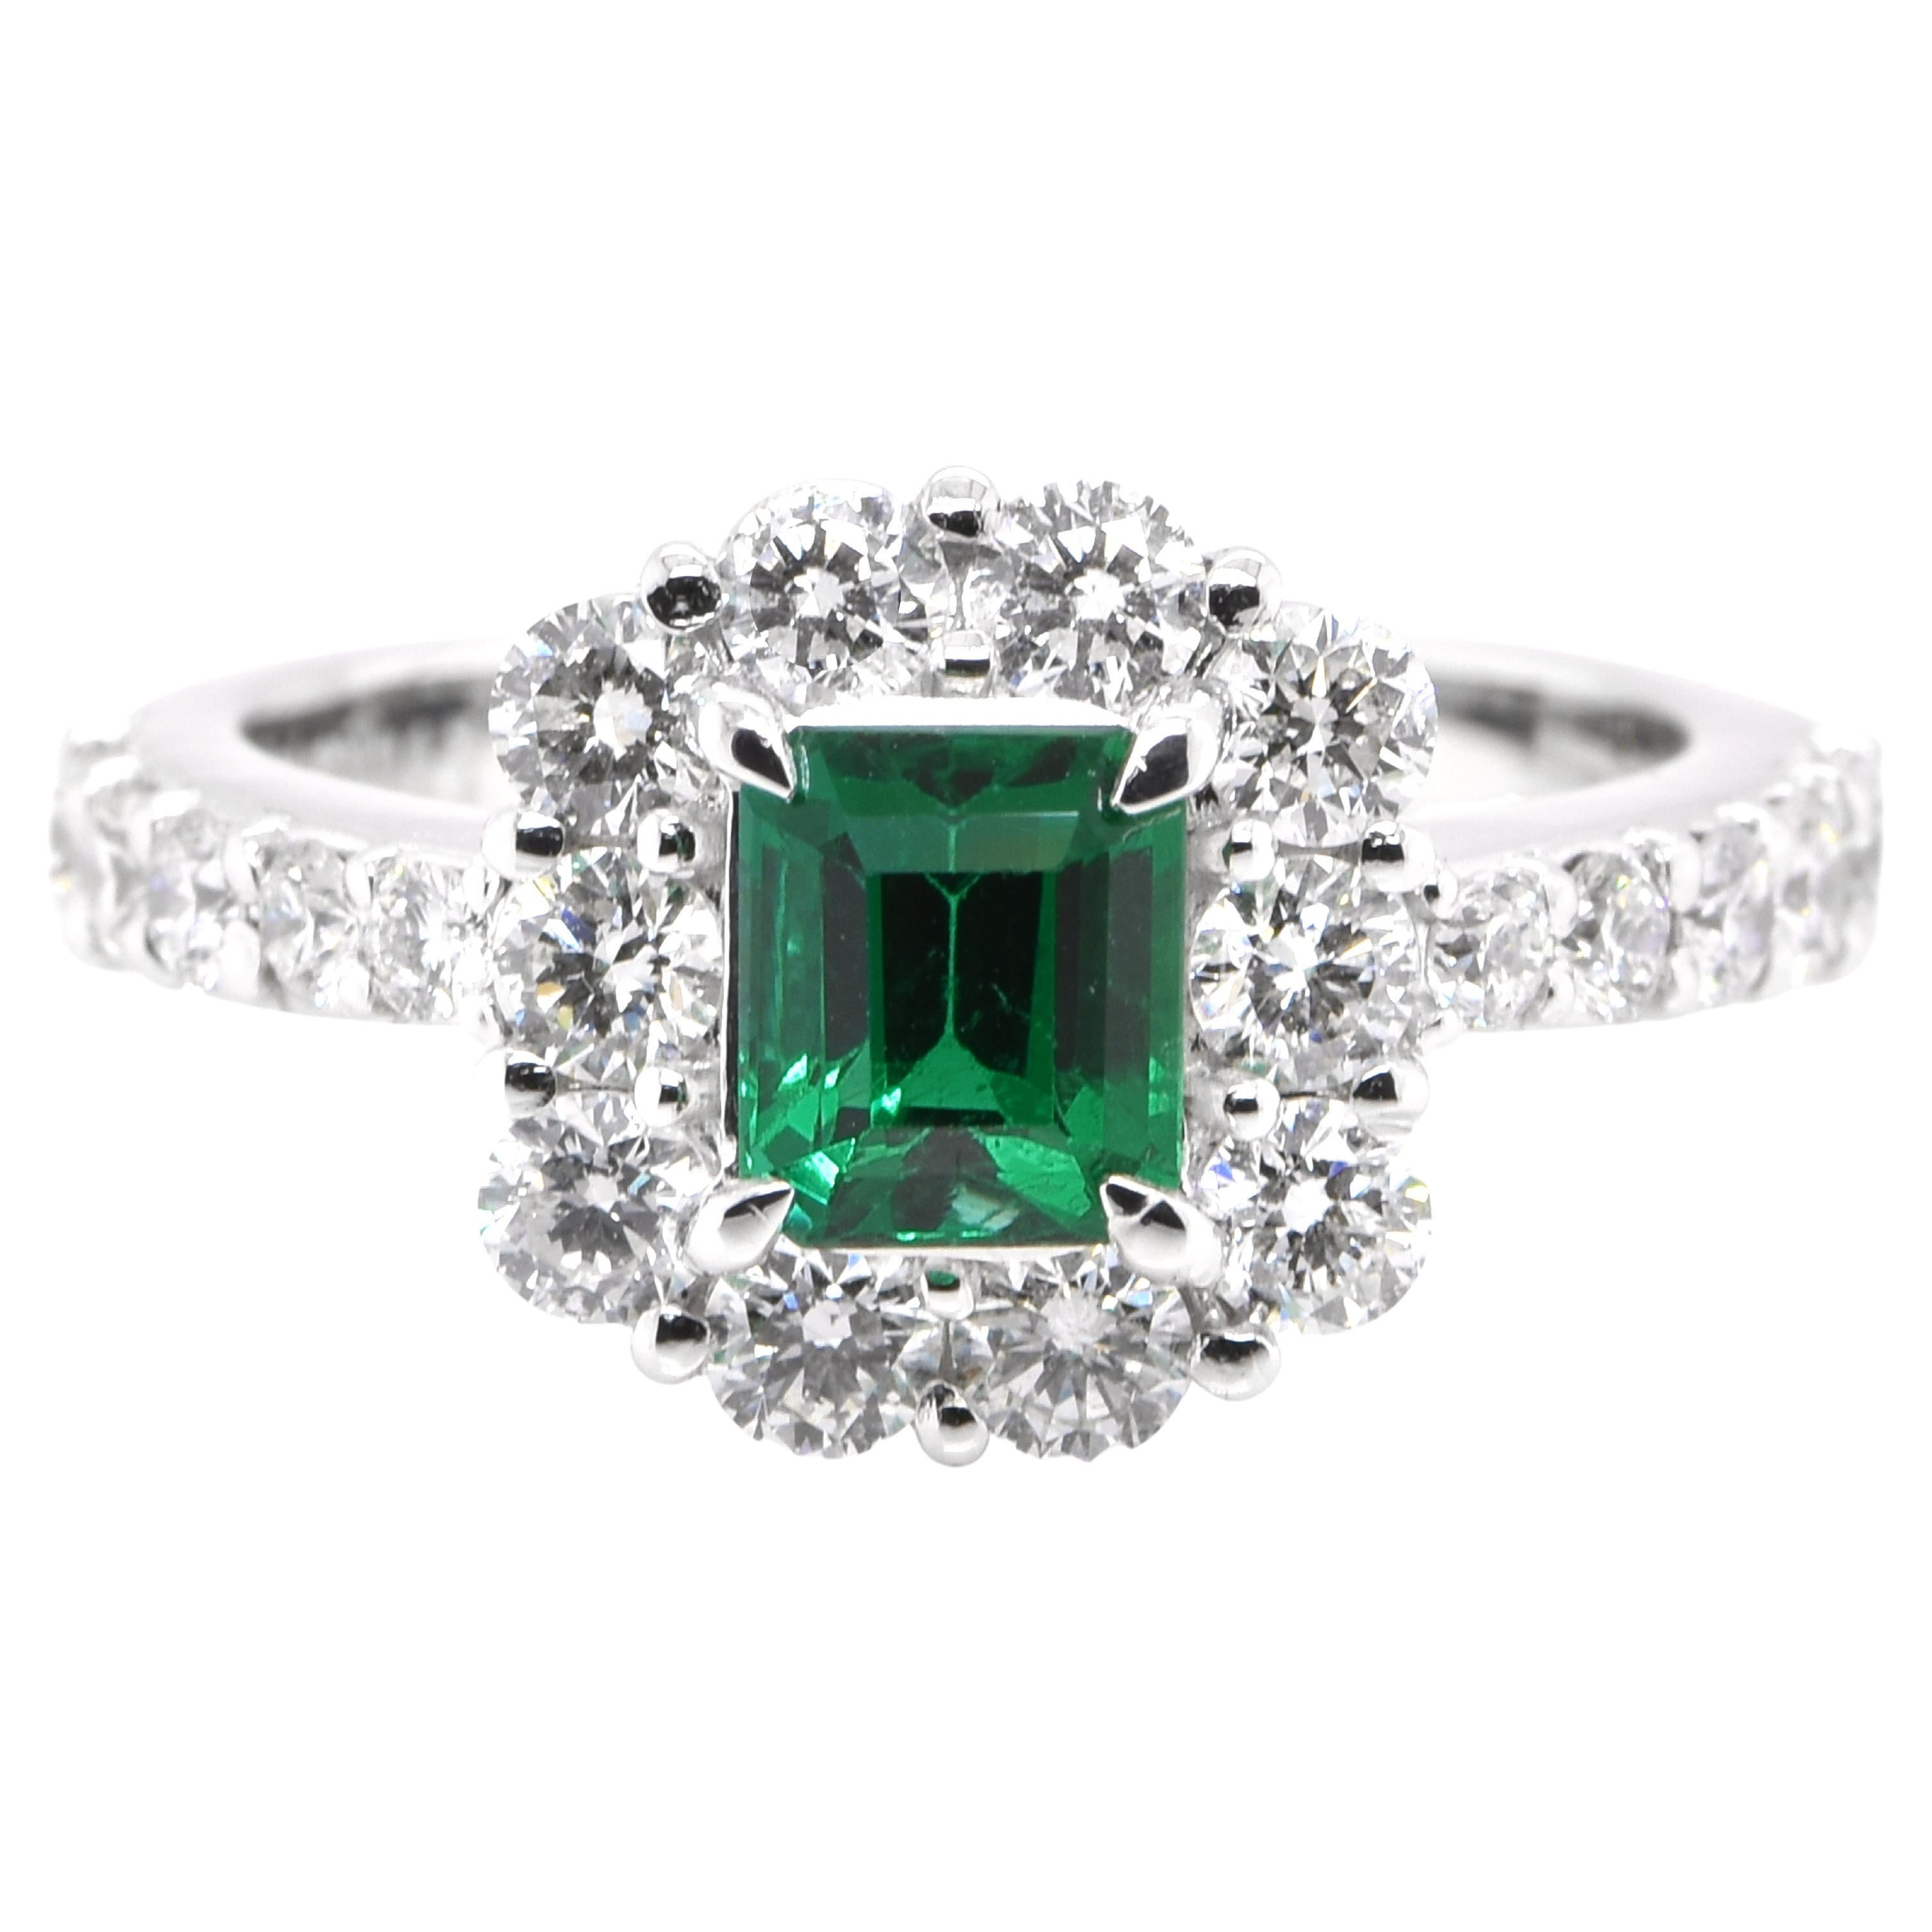 0.89 Carat Vivid Green Emerald and Diamond Halo Ring Set in Platinum